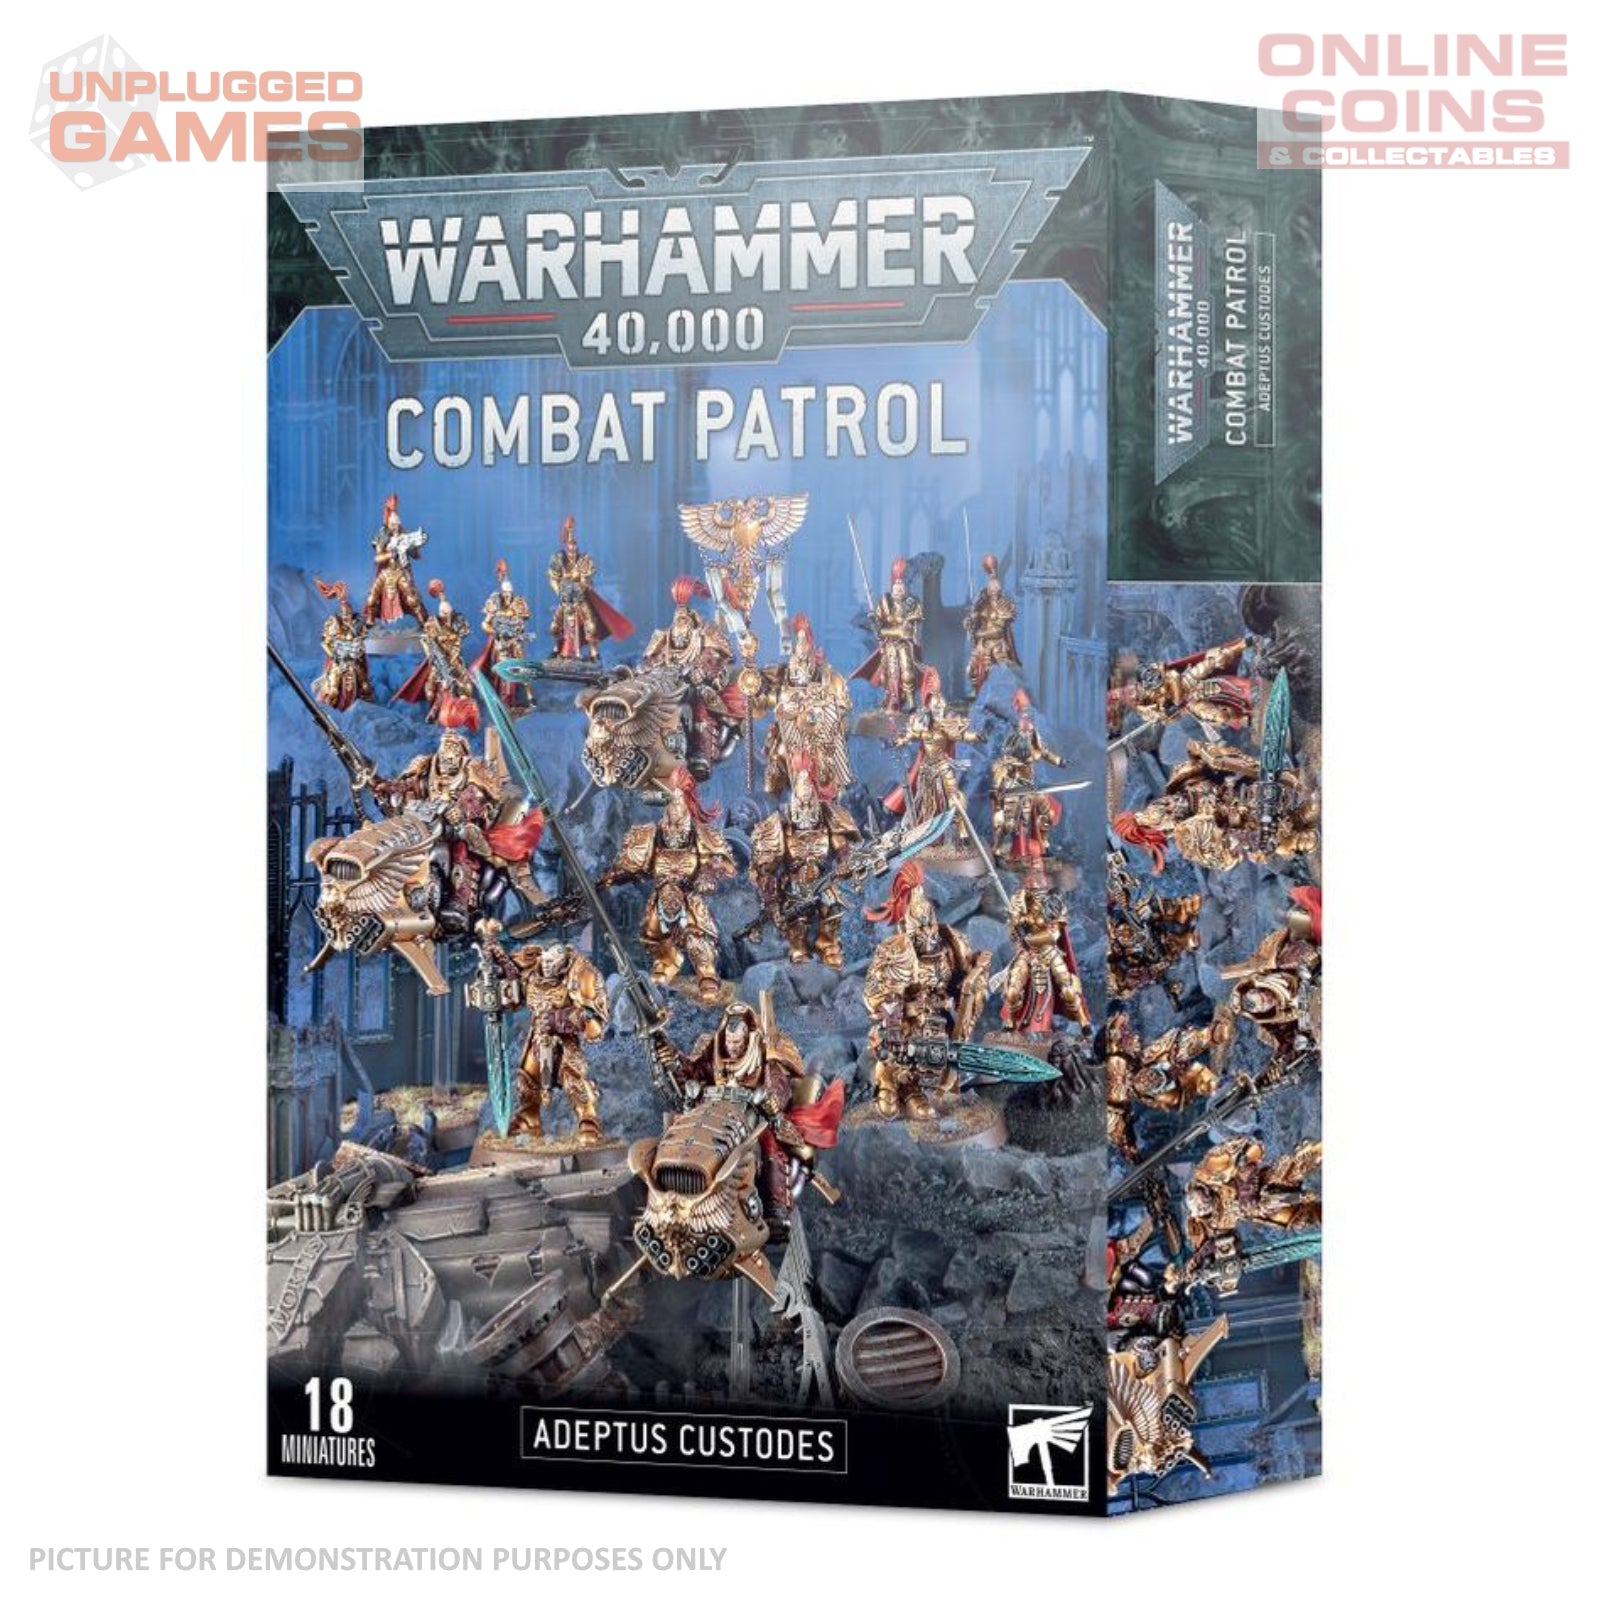 Warhammer 40,000 - Combat Patrol Adeptus Custodes